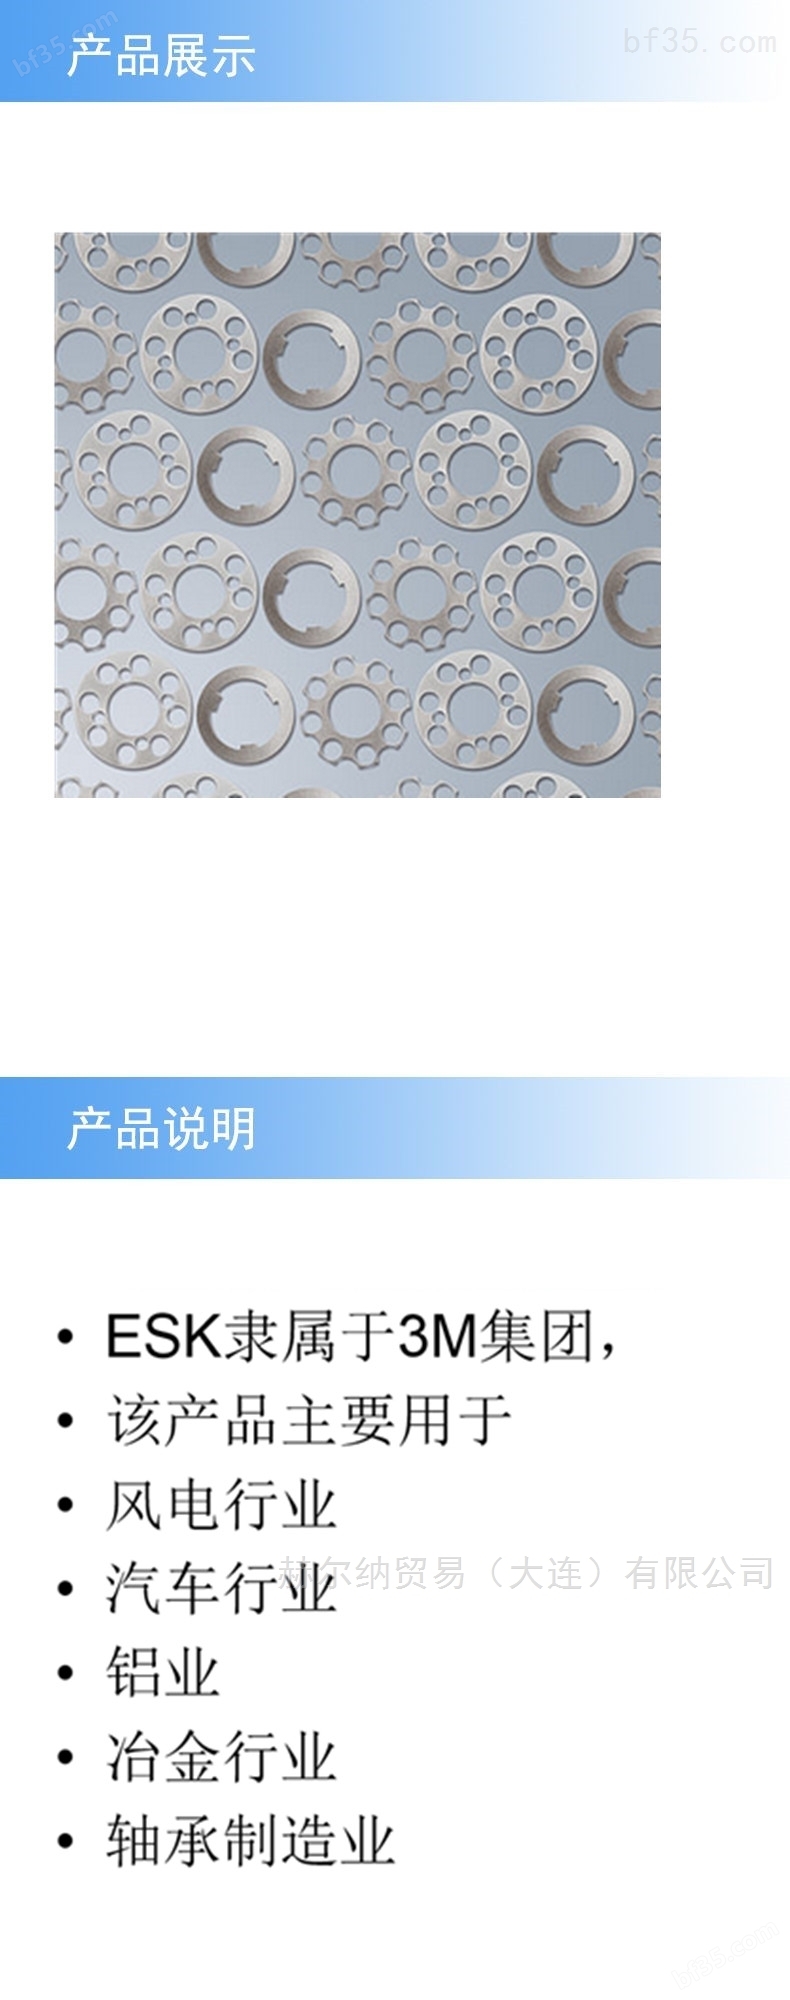 ESK摩擦片氮化硼碳化硅分离环